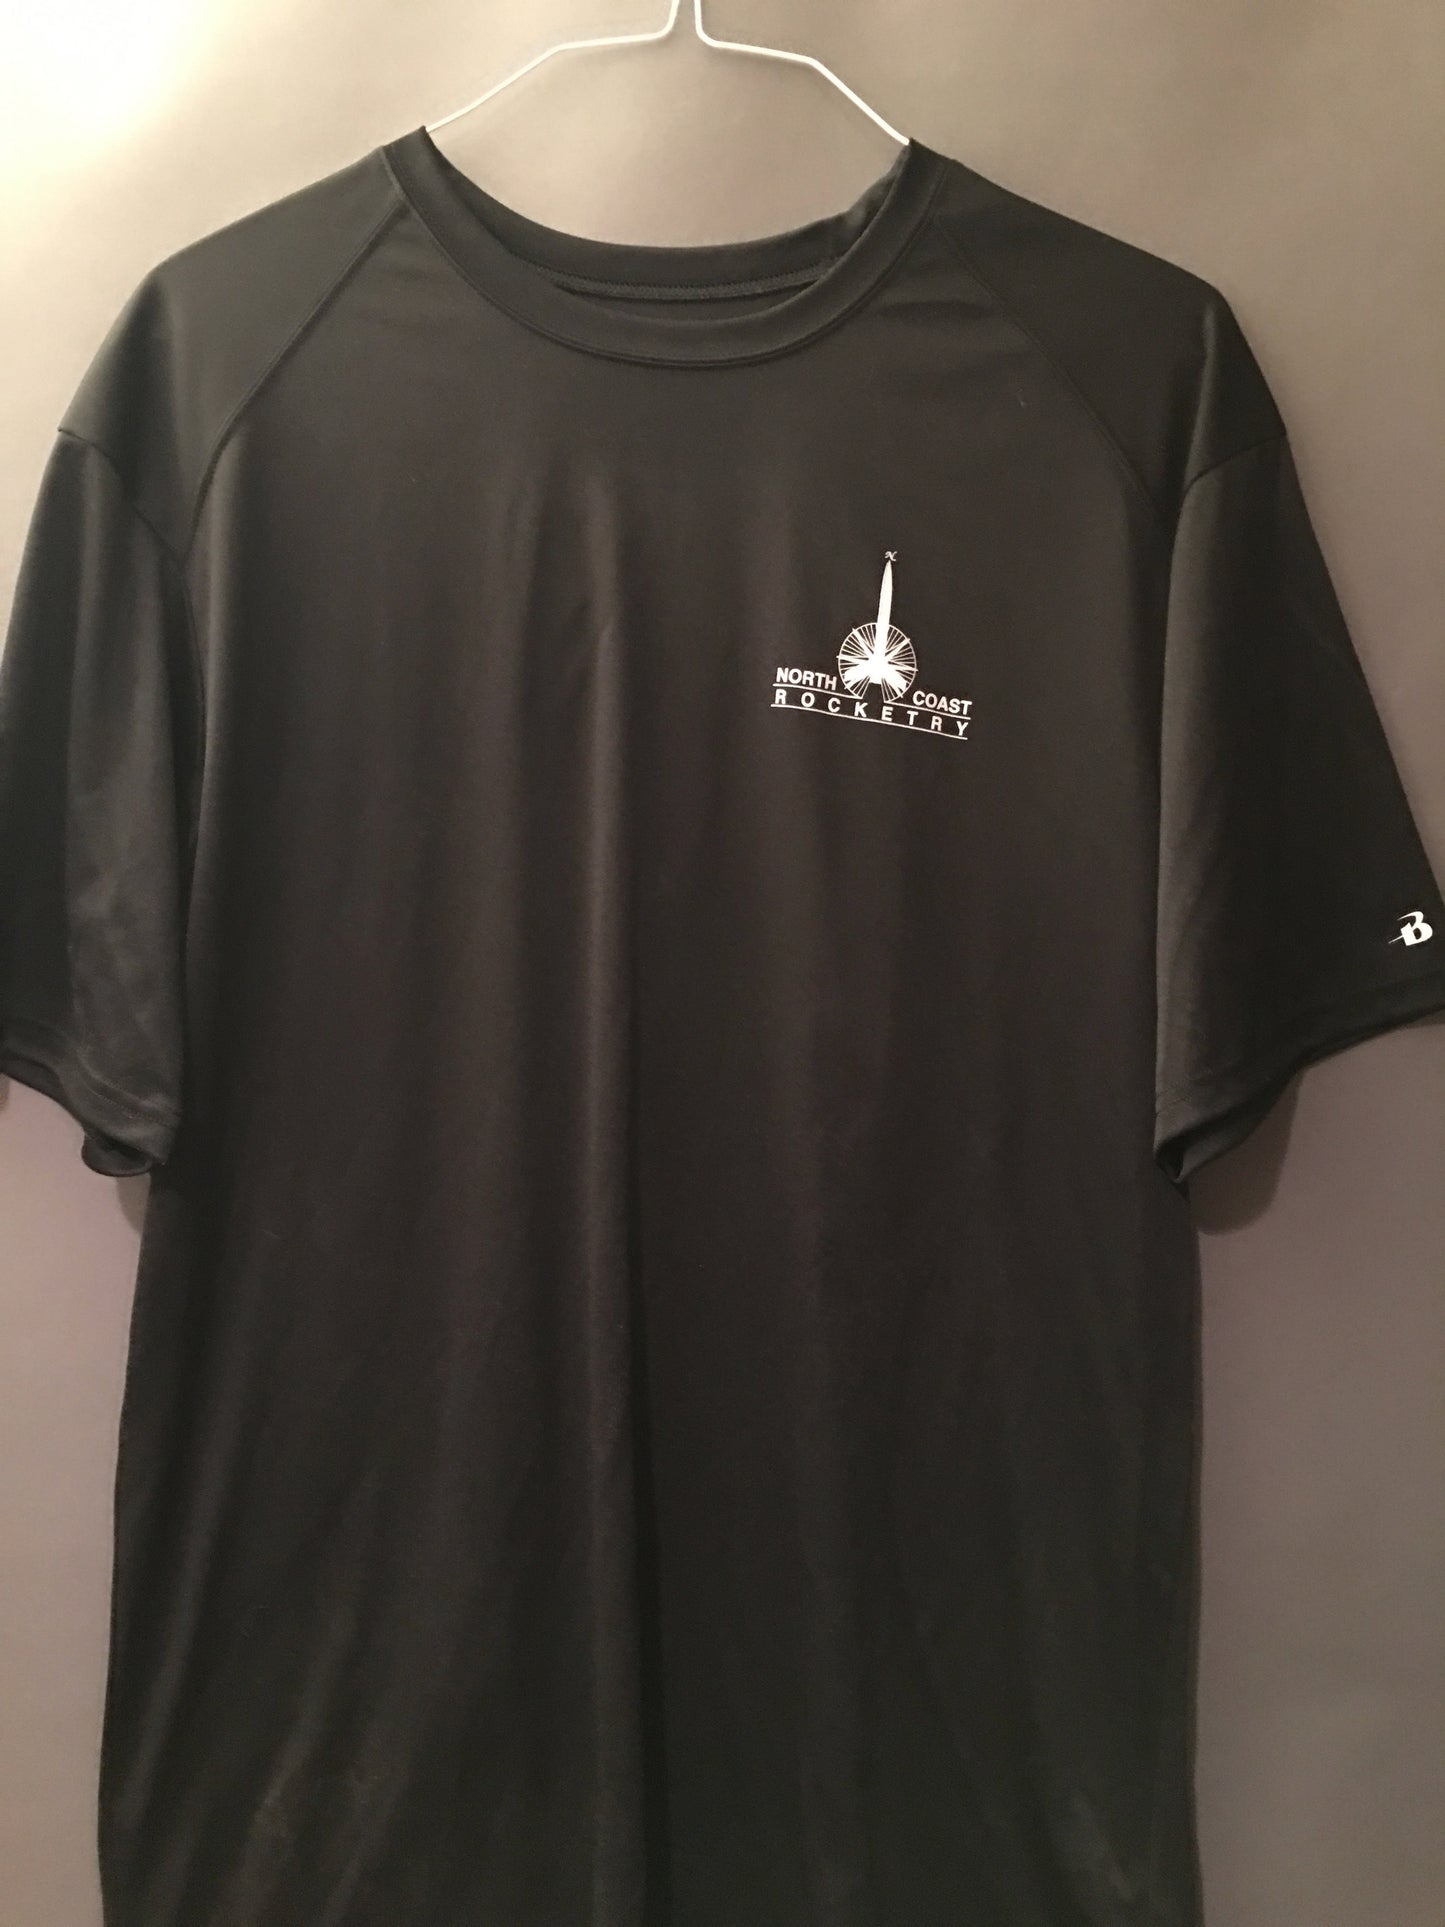 NCR Shirts